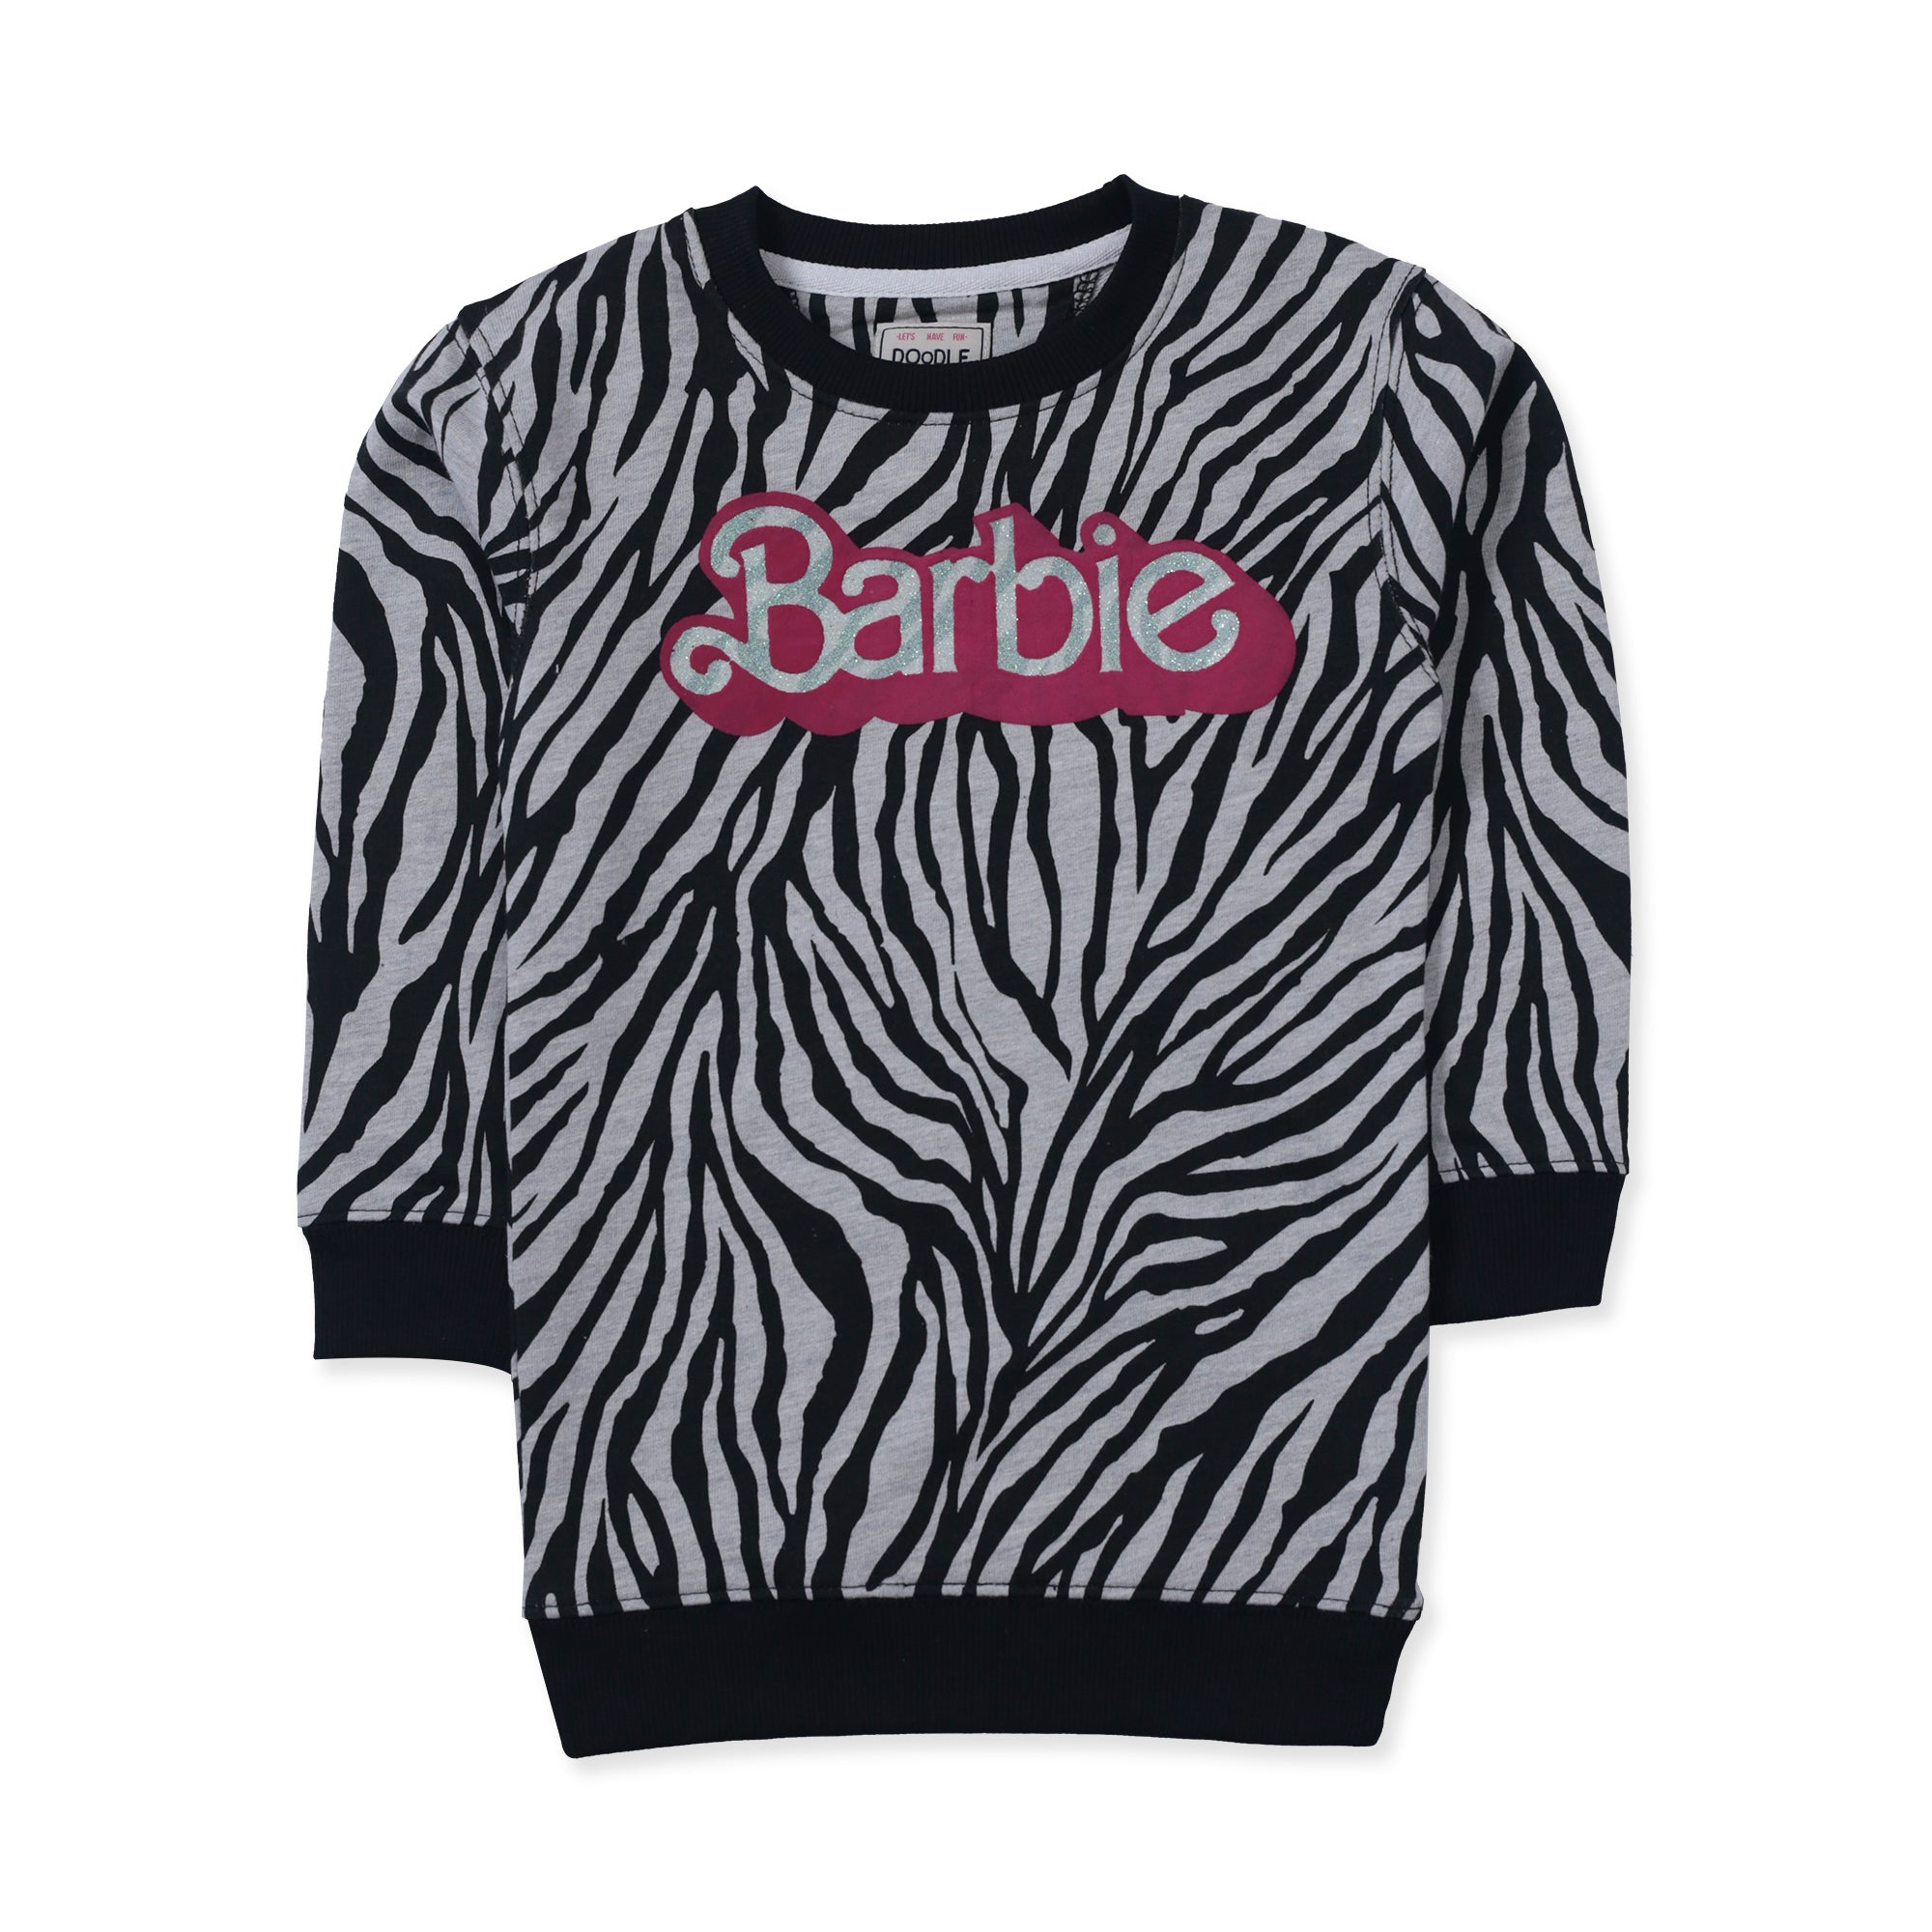 Barbie Graphic Black & White Printed Sweatshirt